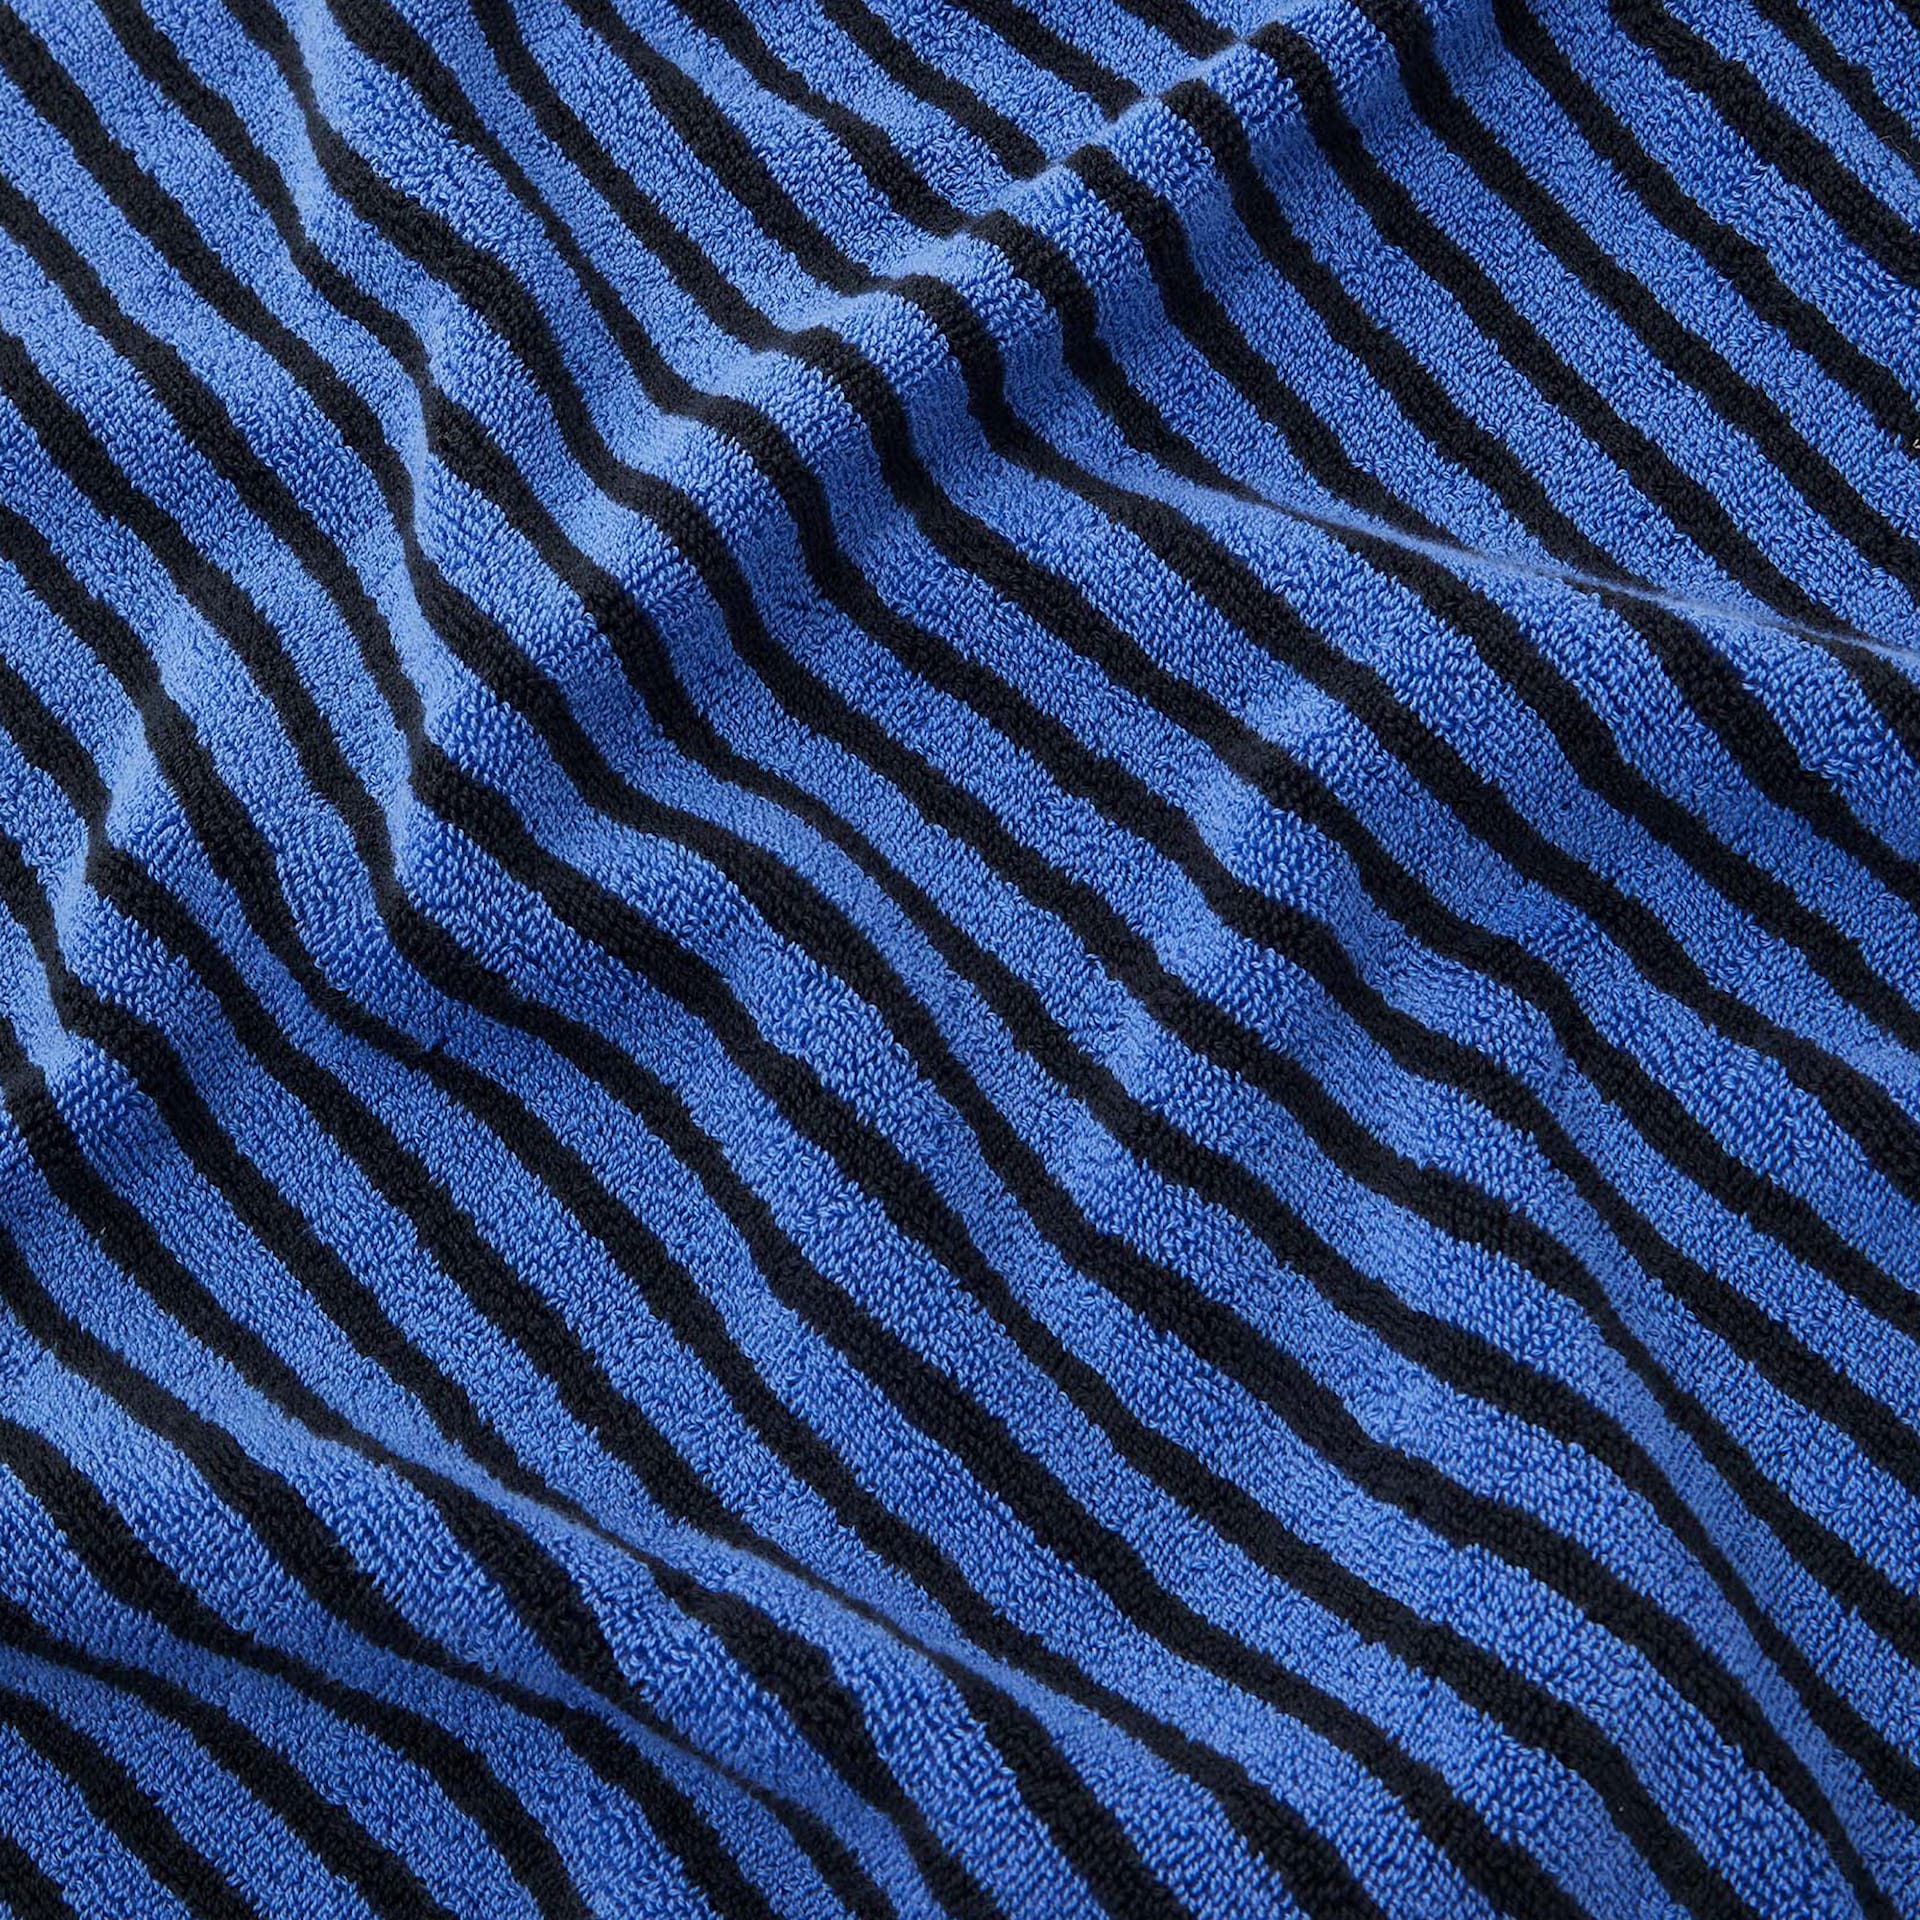 Terry Towel Striped Blue & Black - TEKLA - NO GA